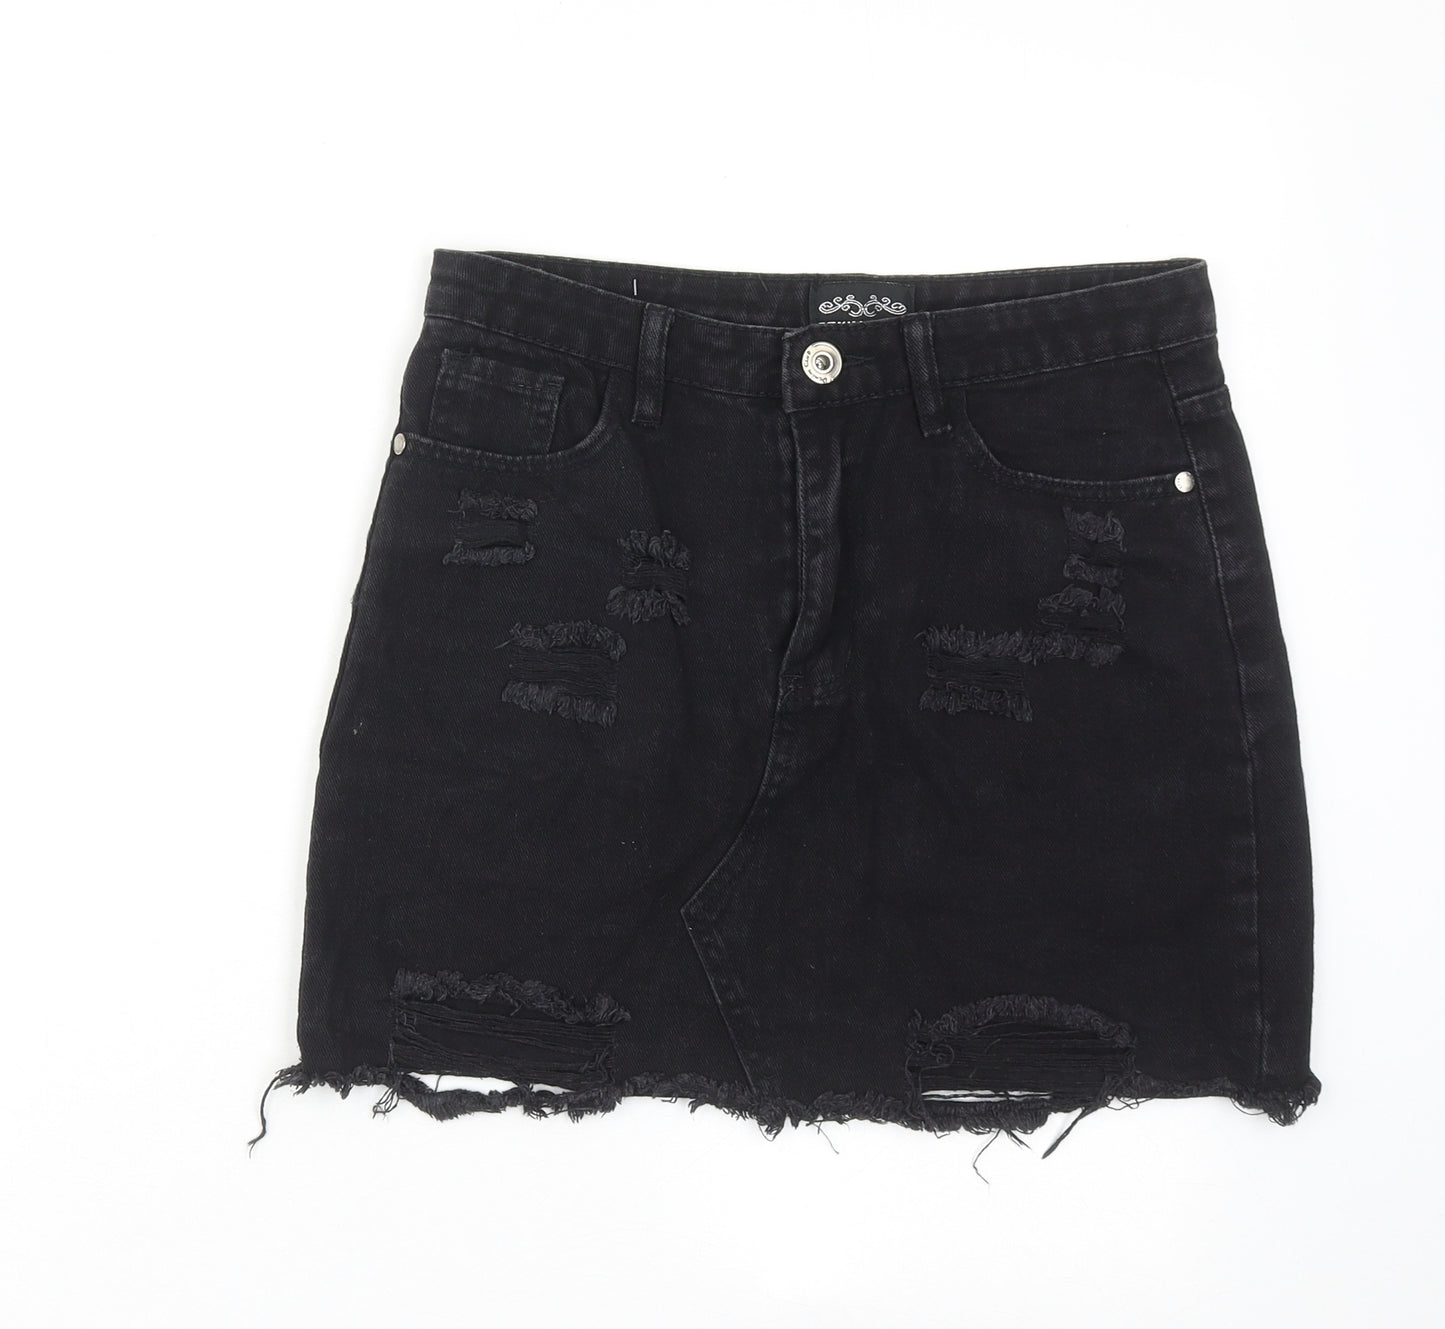 Denim Club Womens Black Cotton A-Line Skirt Size 10 Zip - Distressed Look